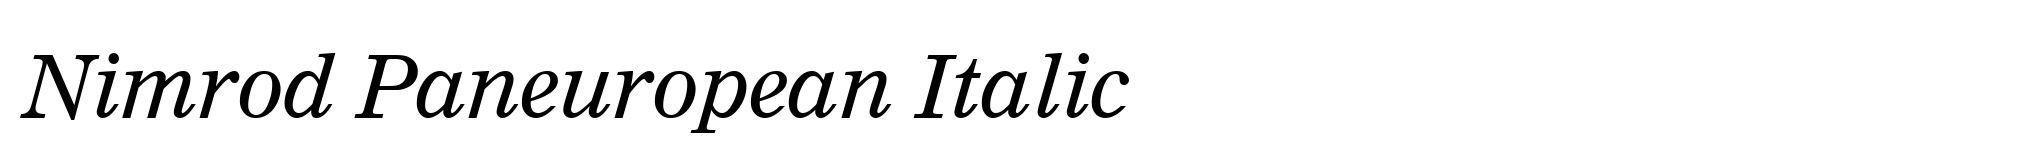 Nimrod Paneuropean Italic image